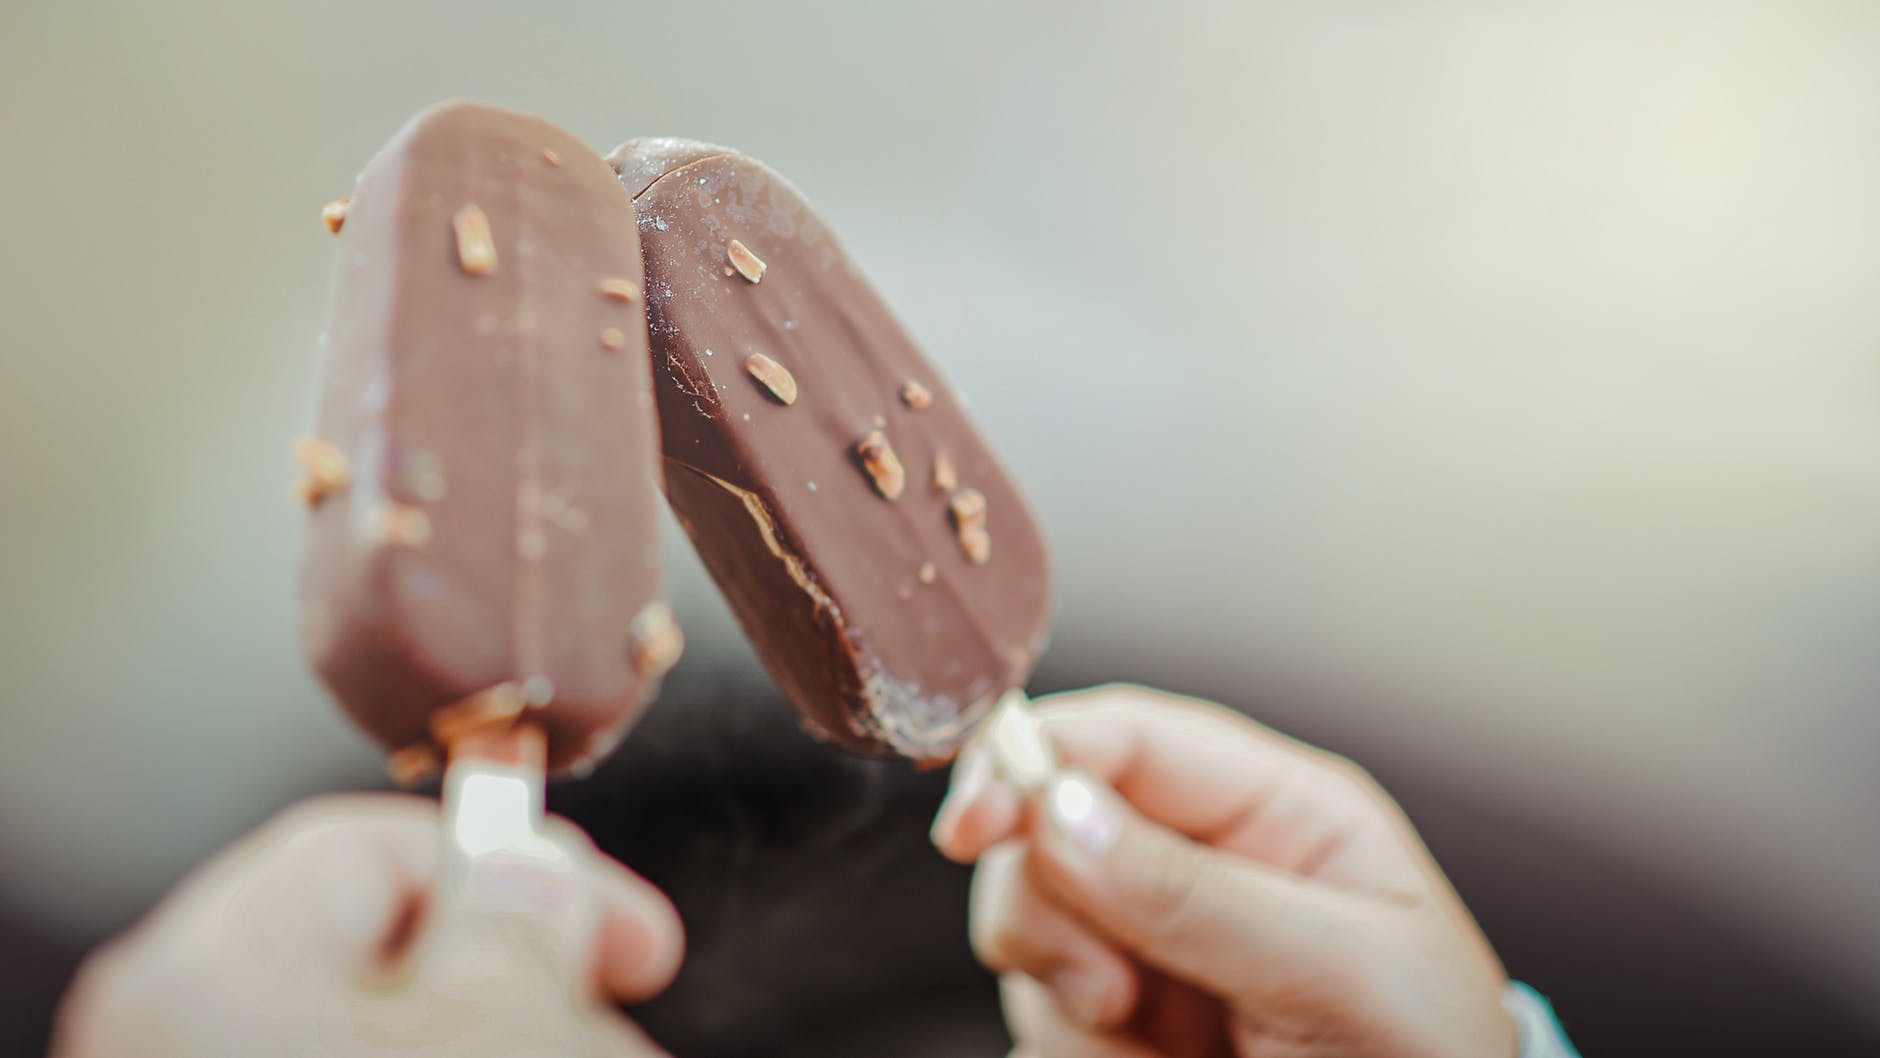 chocolate coated ice creams